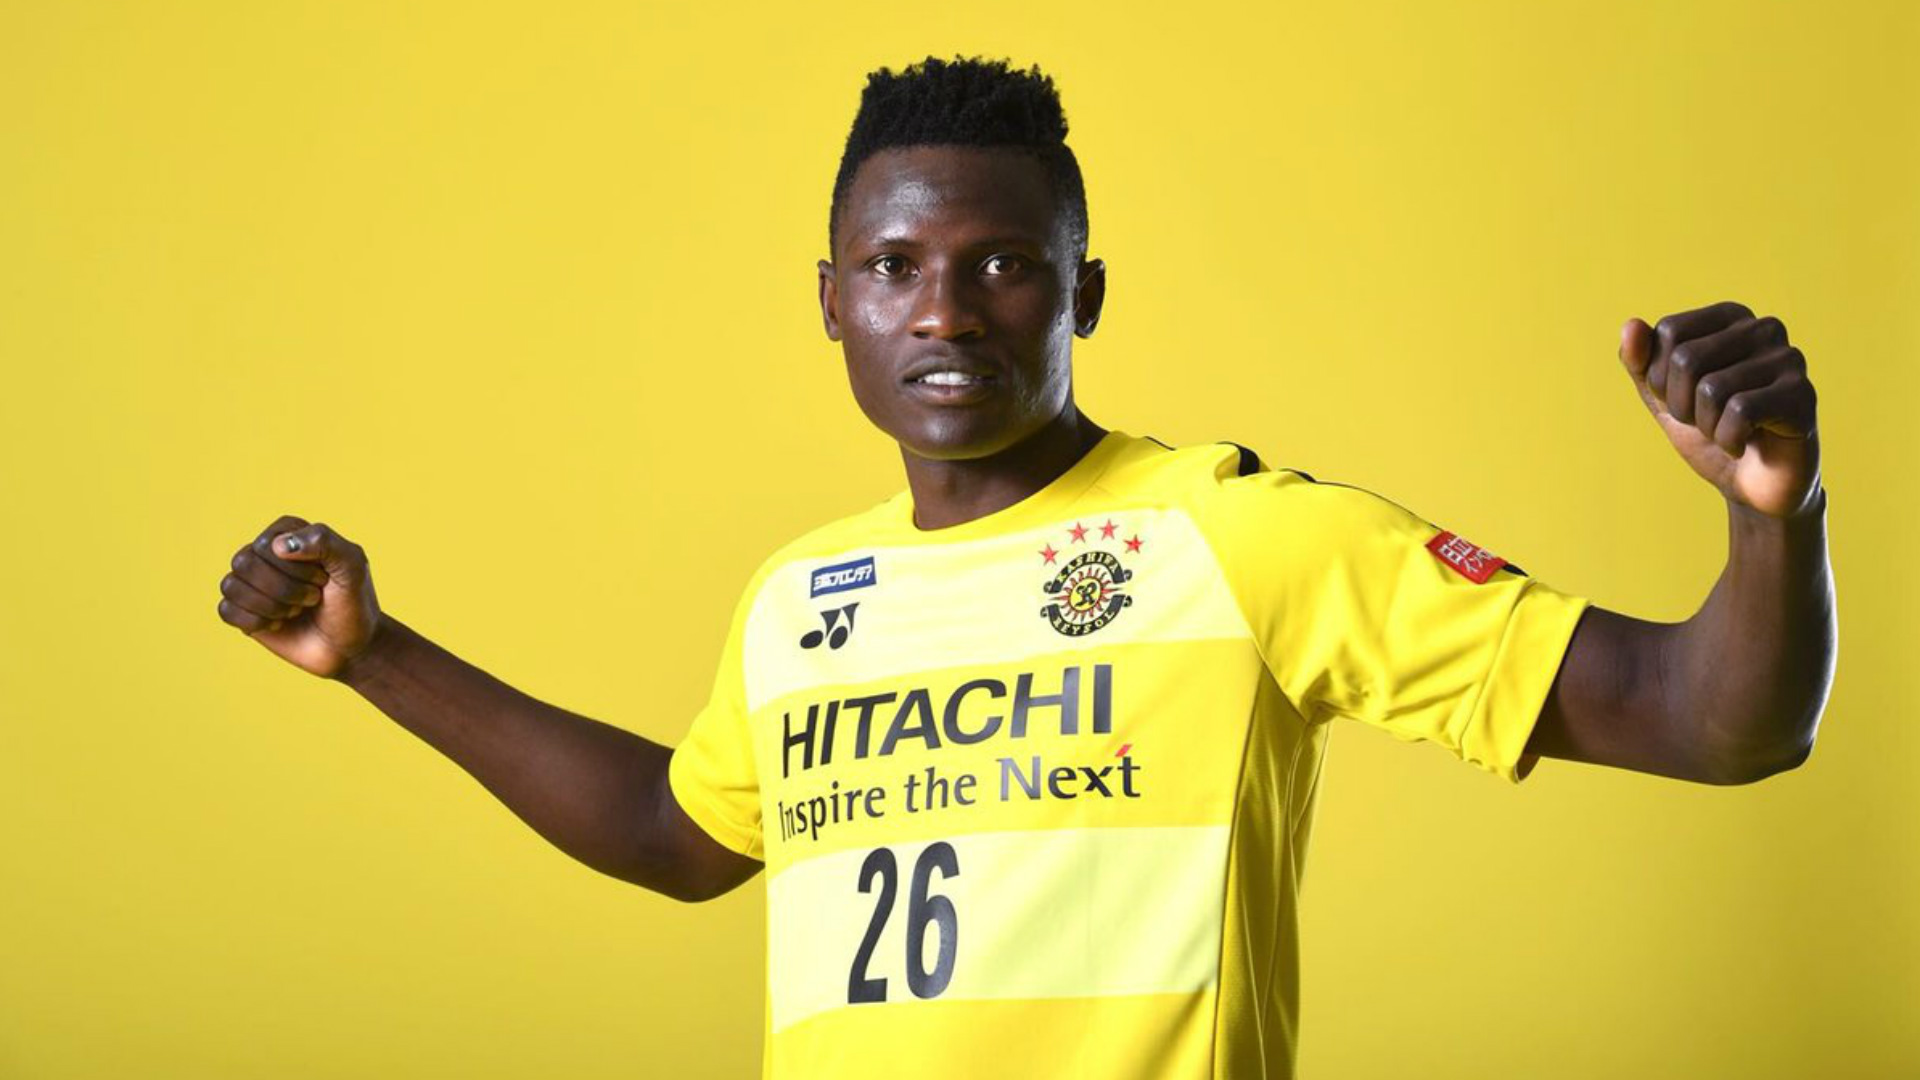 Michael Olunga aims to perform better than last season